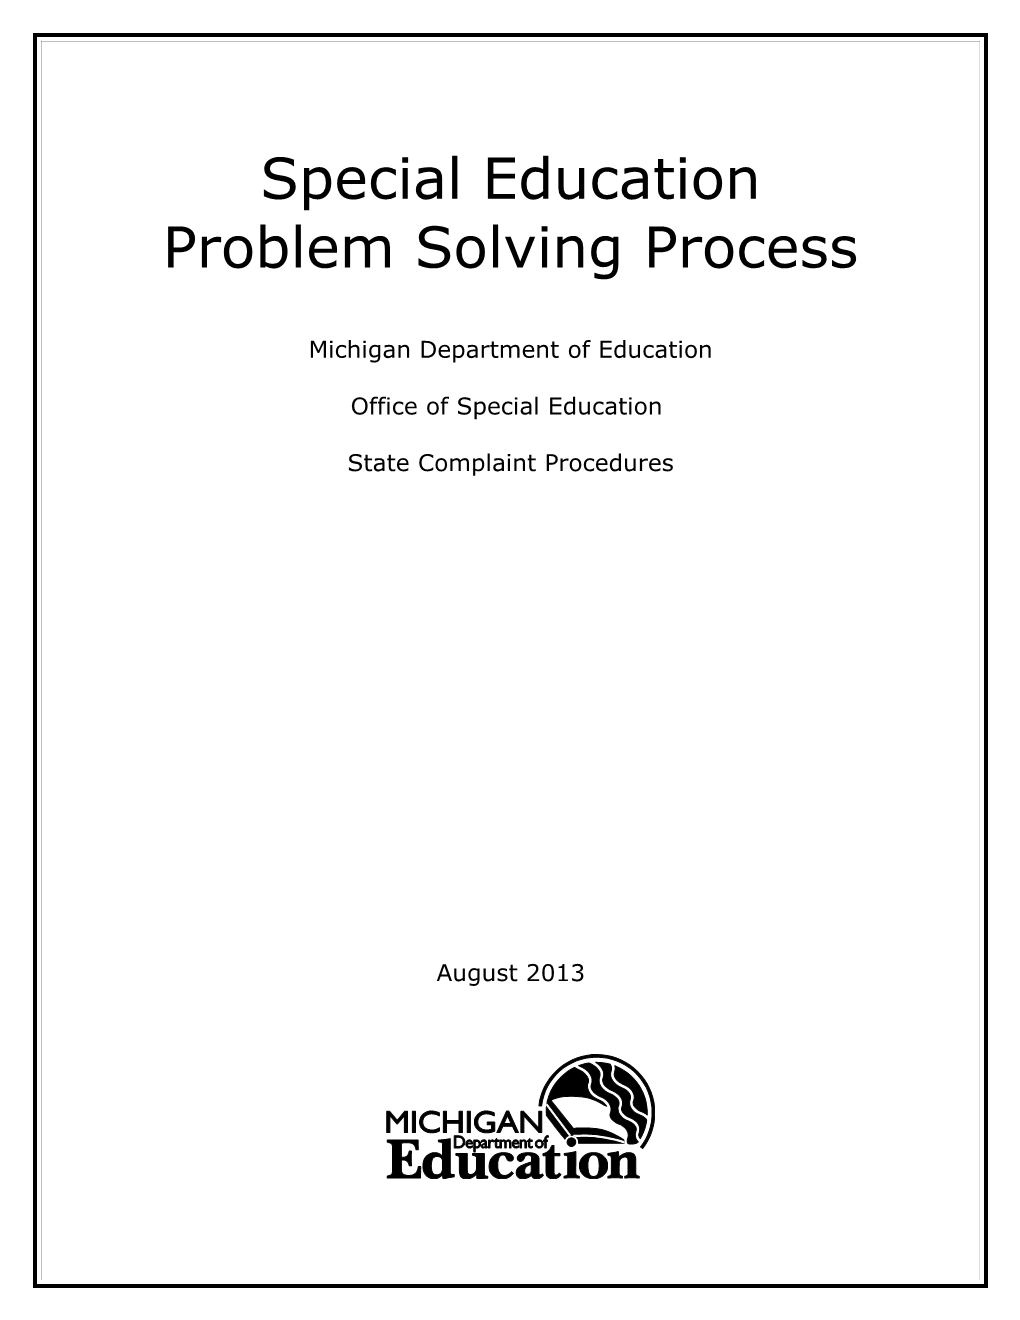 Special Education Problem Solving Process